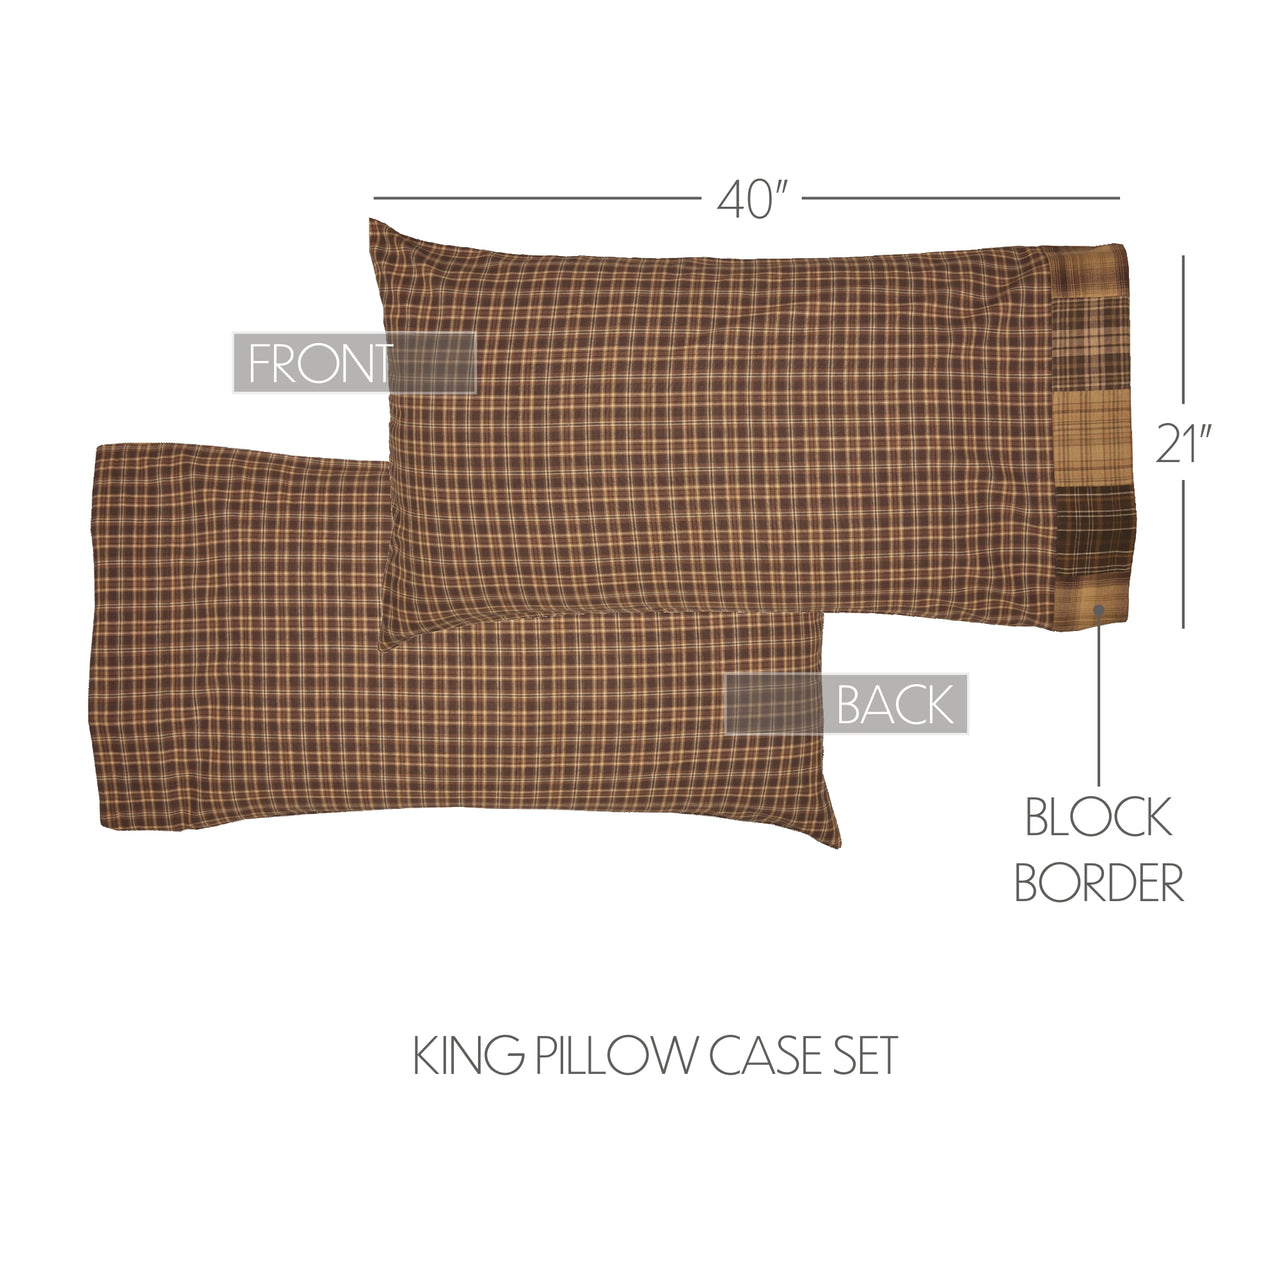 Prescott King Pillow Case Block Border Set of 2 21x40 VHC Brands